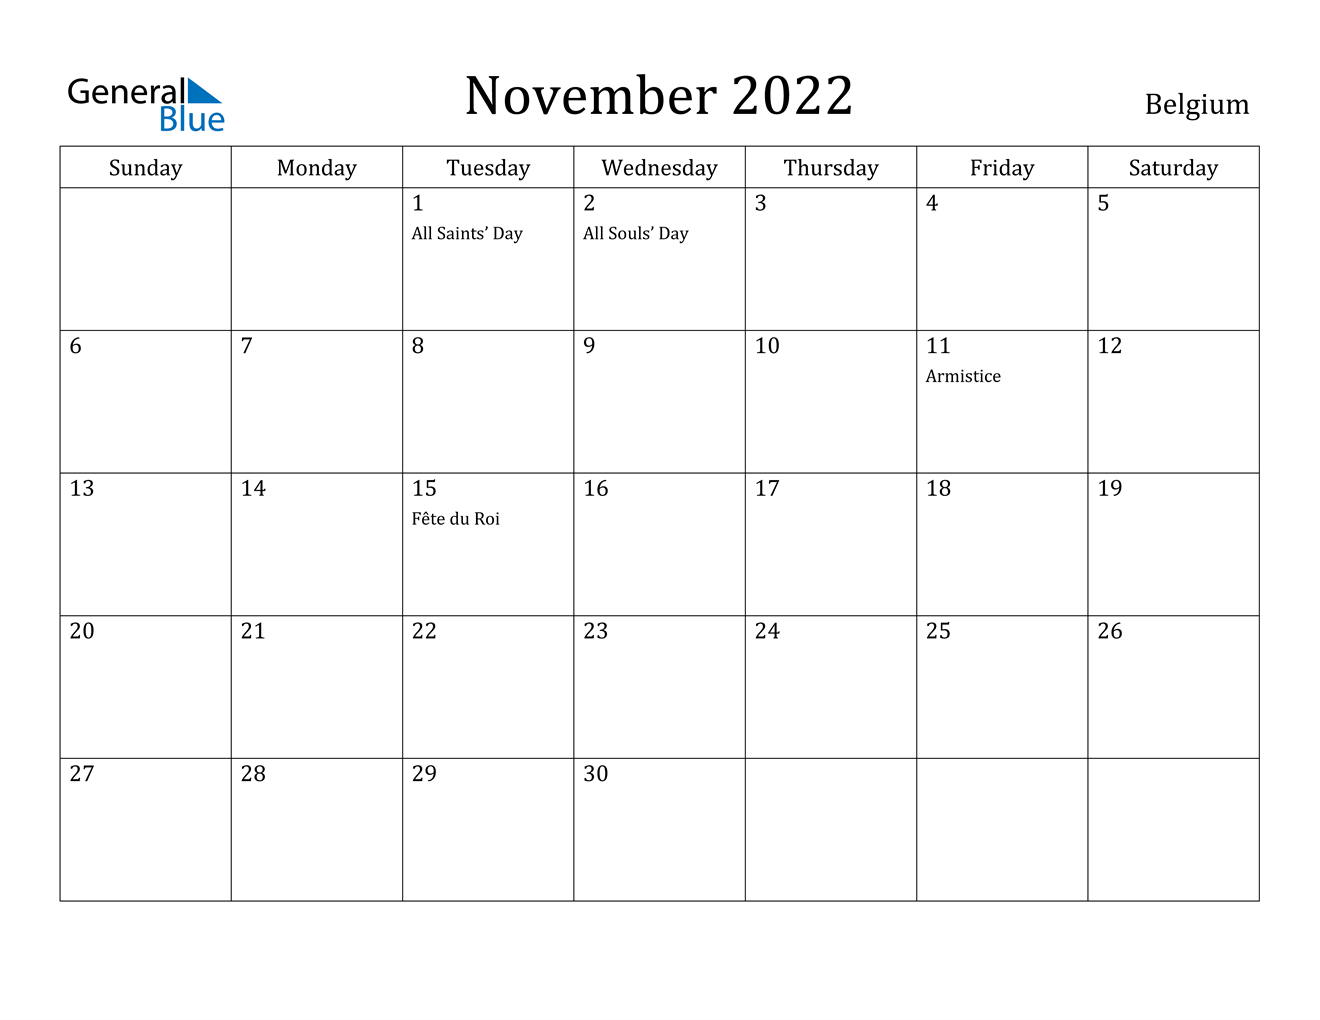 November 2022 Calendar - Belgium